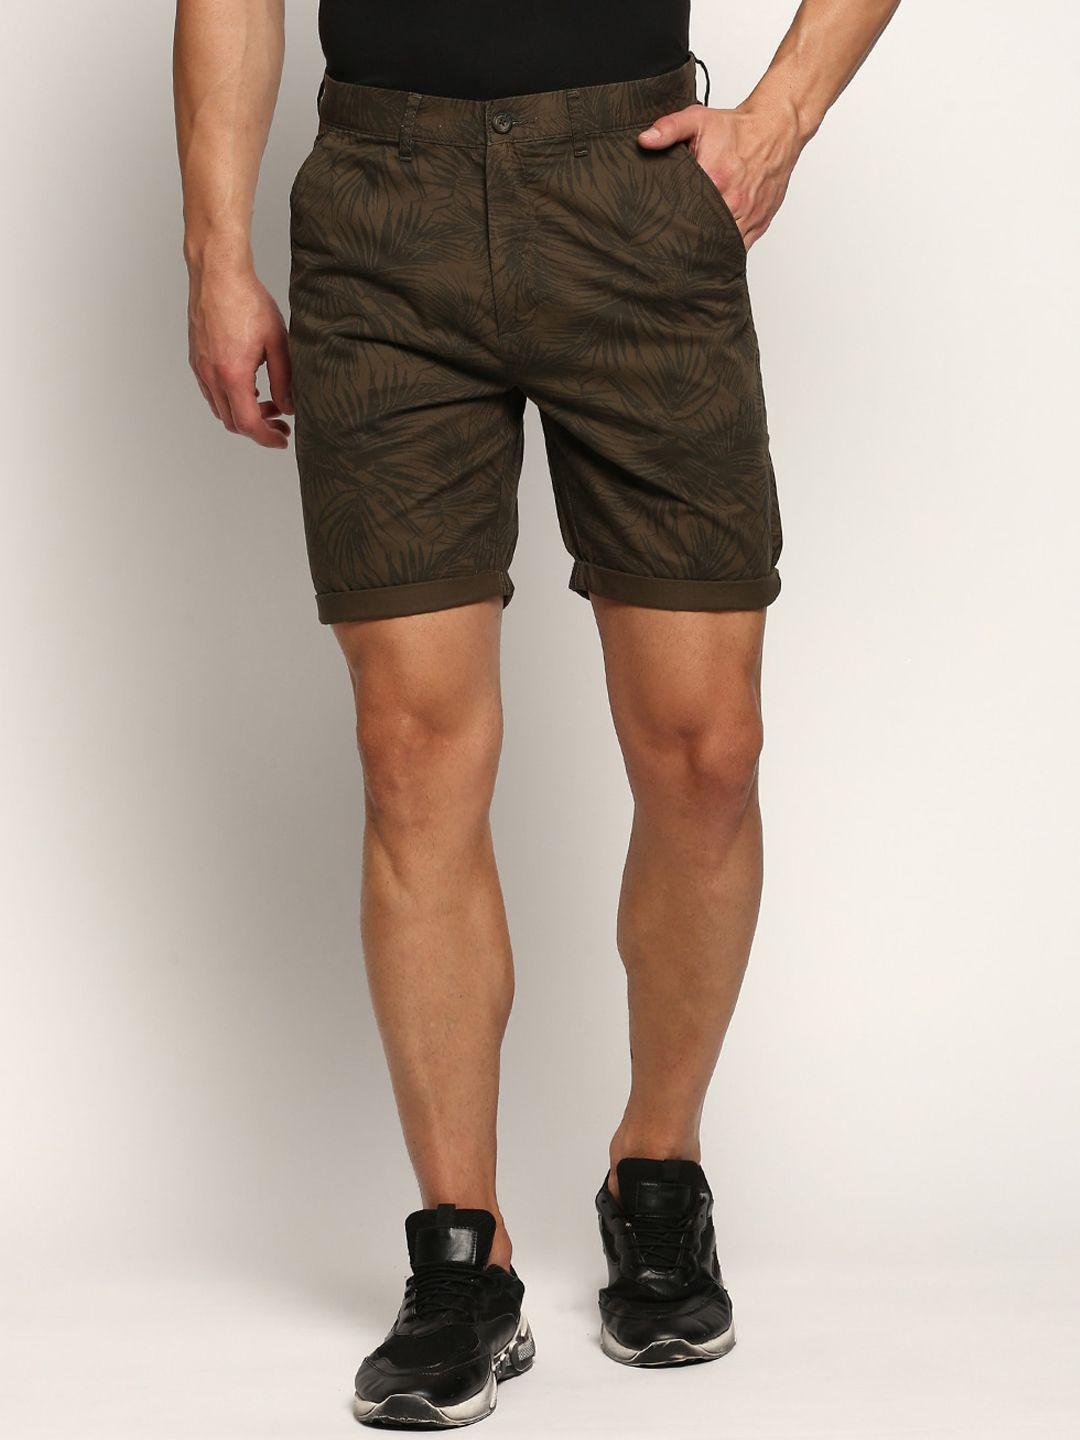 showoff-men-floral-printed-mid-rise-cotton-shorts